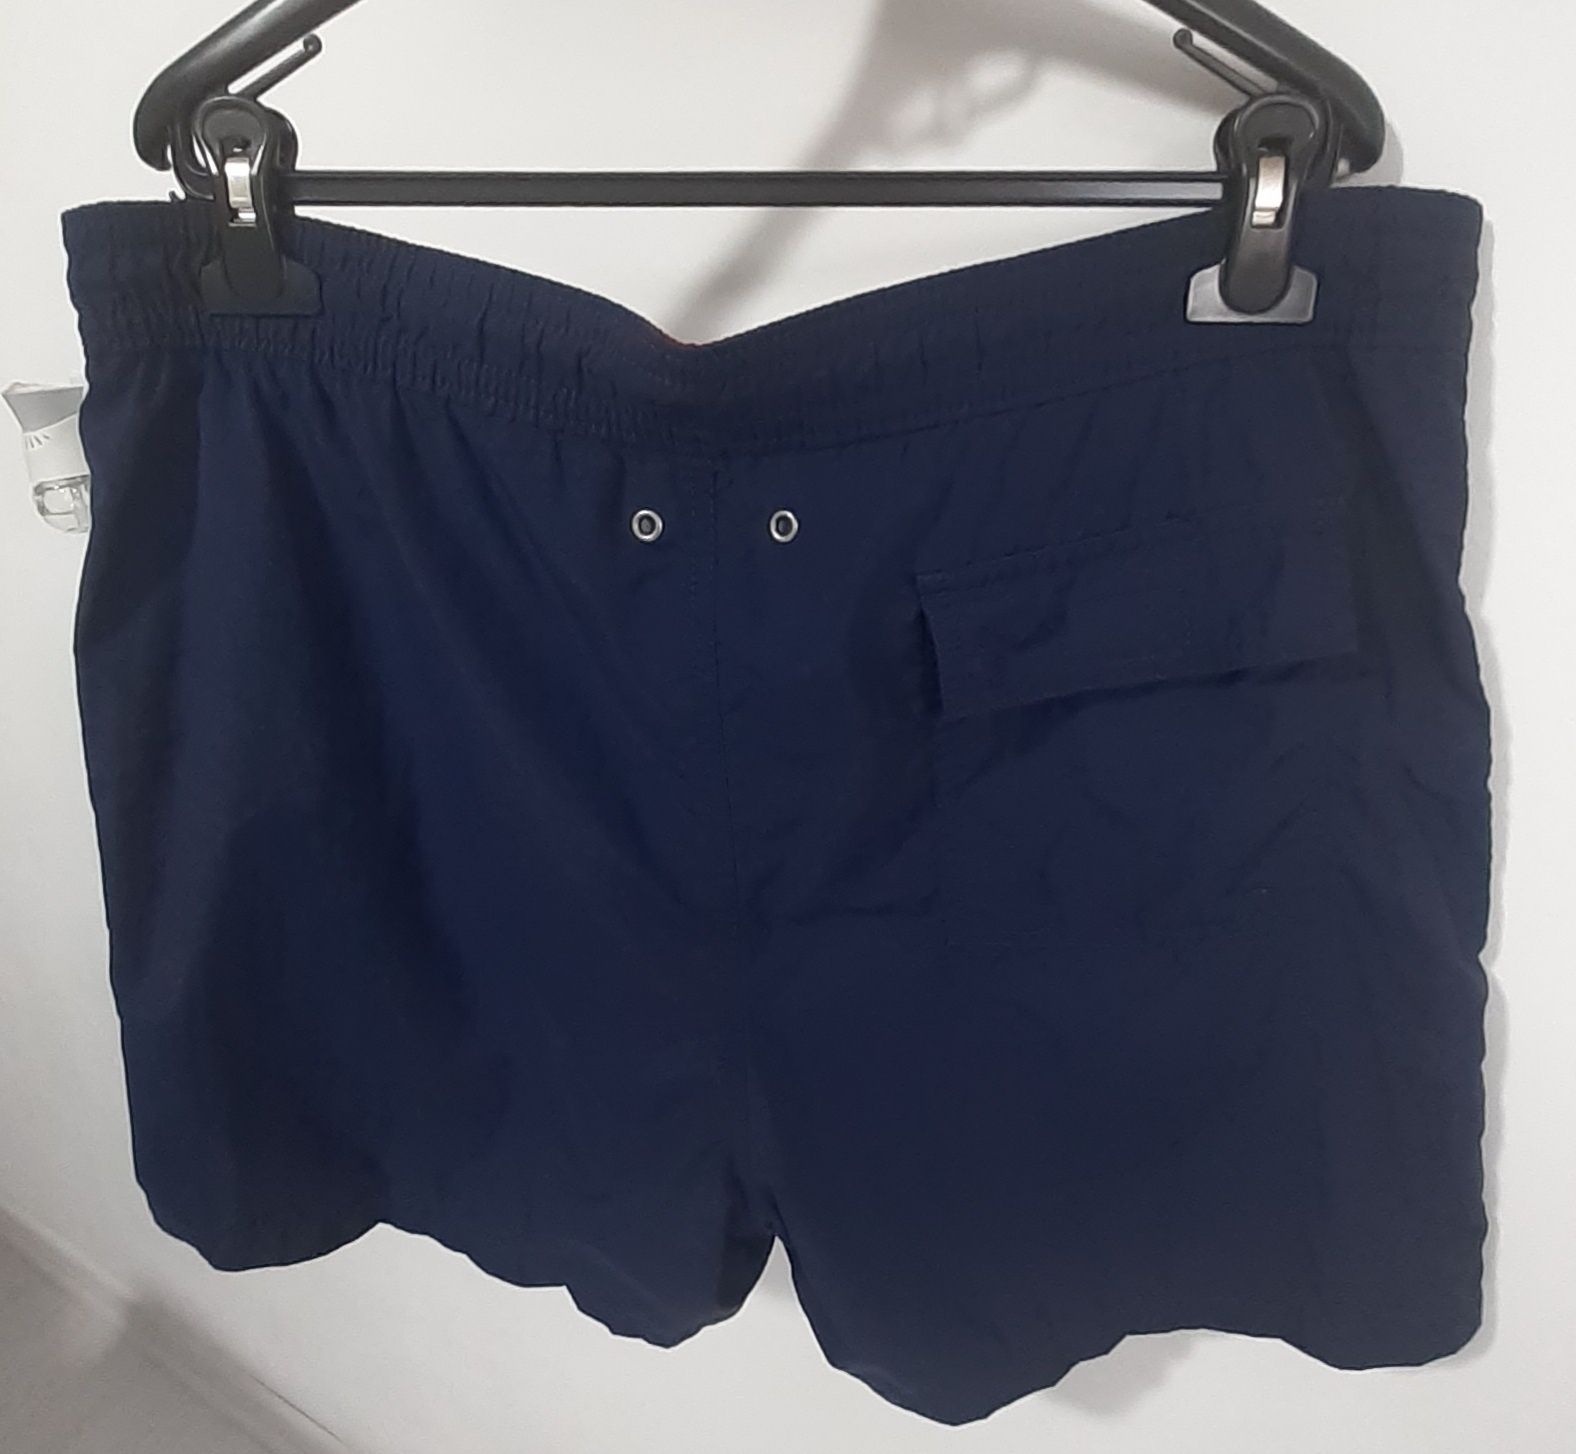 Pantaloni scurti Short Ralph Lauren Marimea M 98 cm talie. Originali.